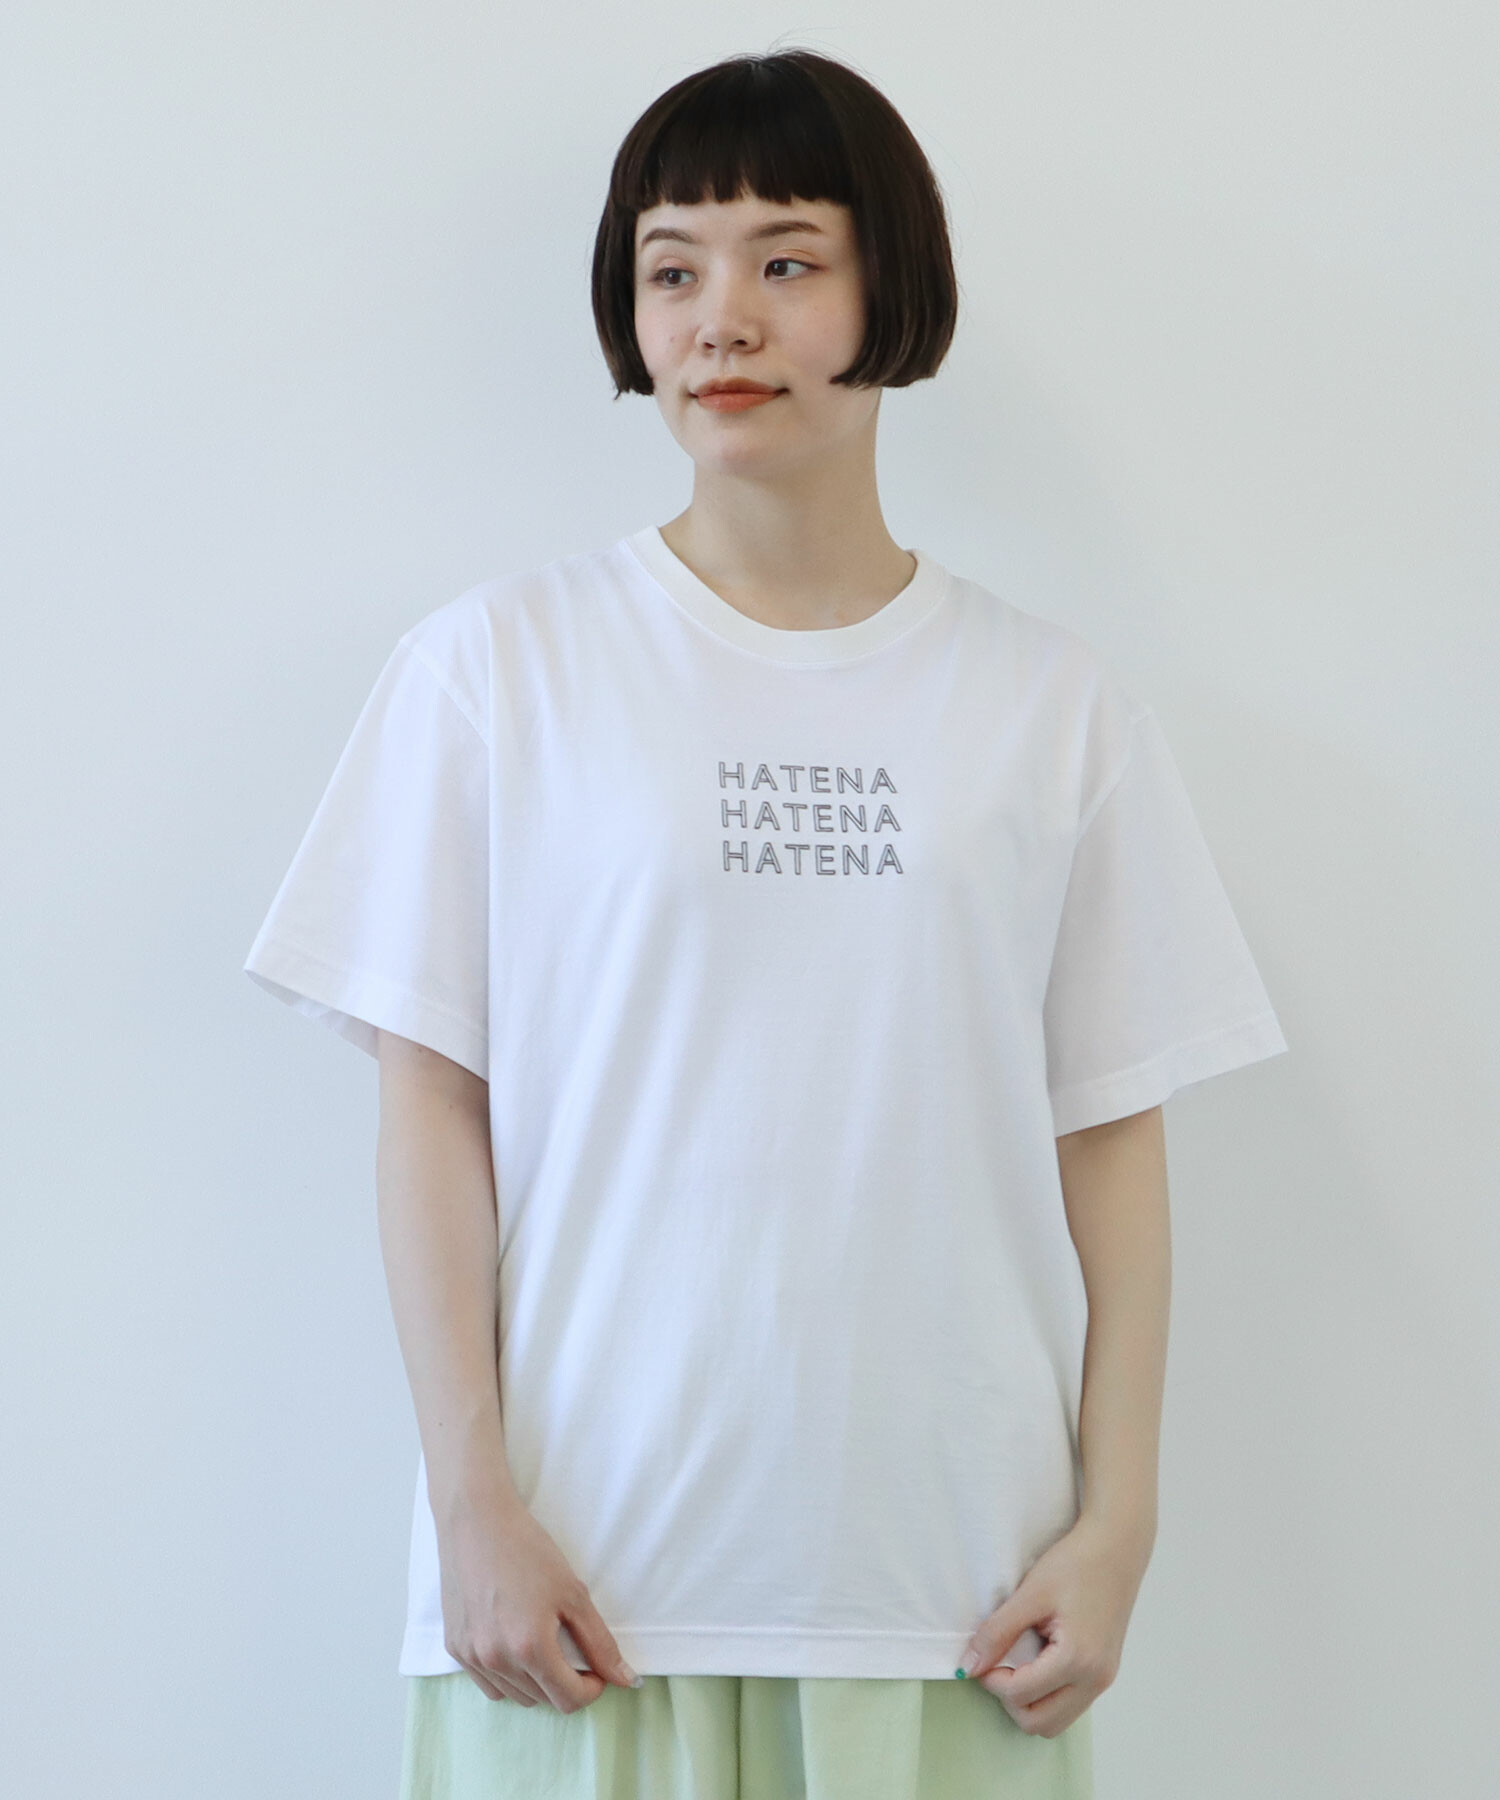 AMBIDEX Store HATENA×OKI KENICHI T-シャツ size1(F ホワイト): FLAT 